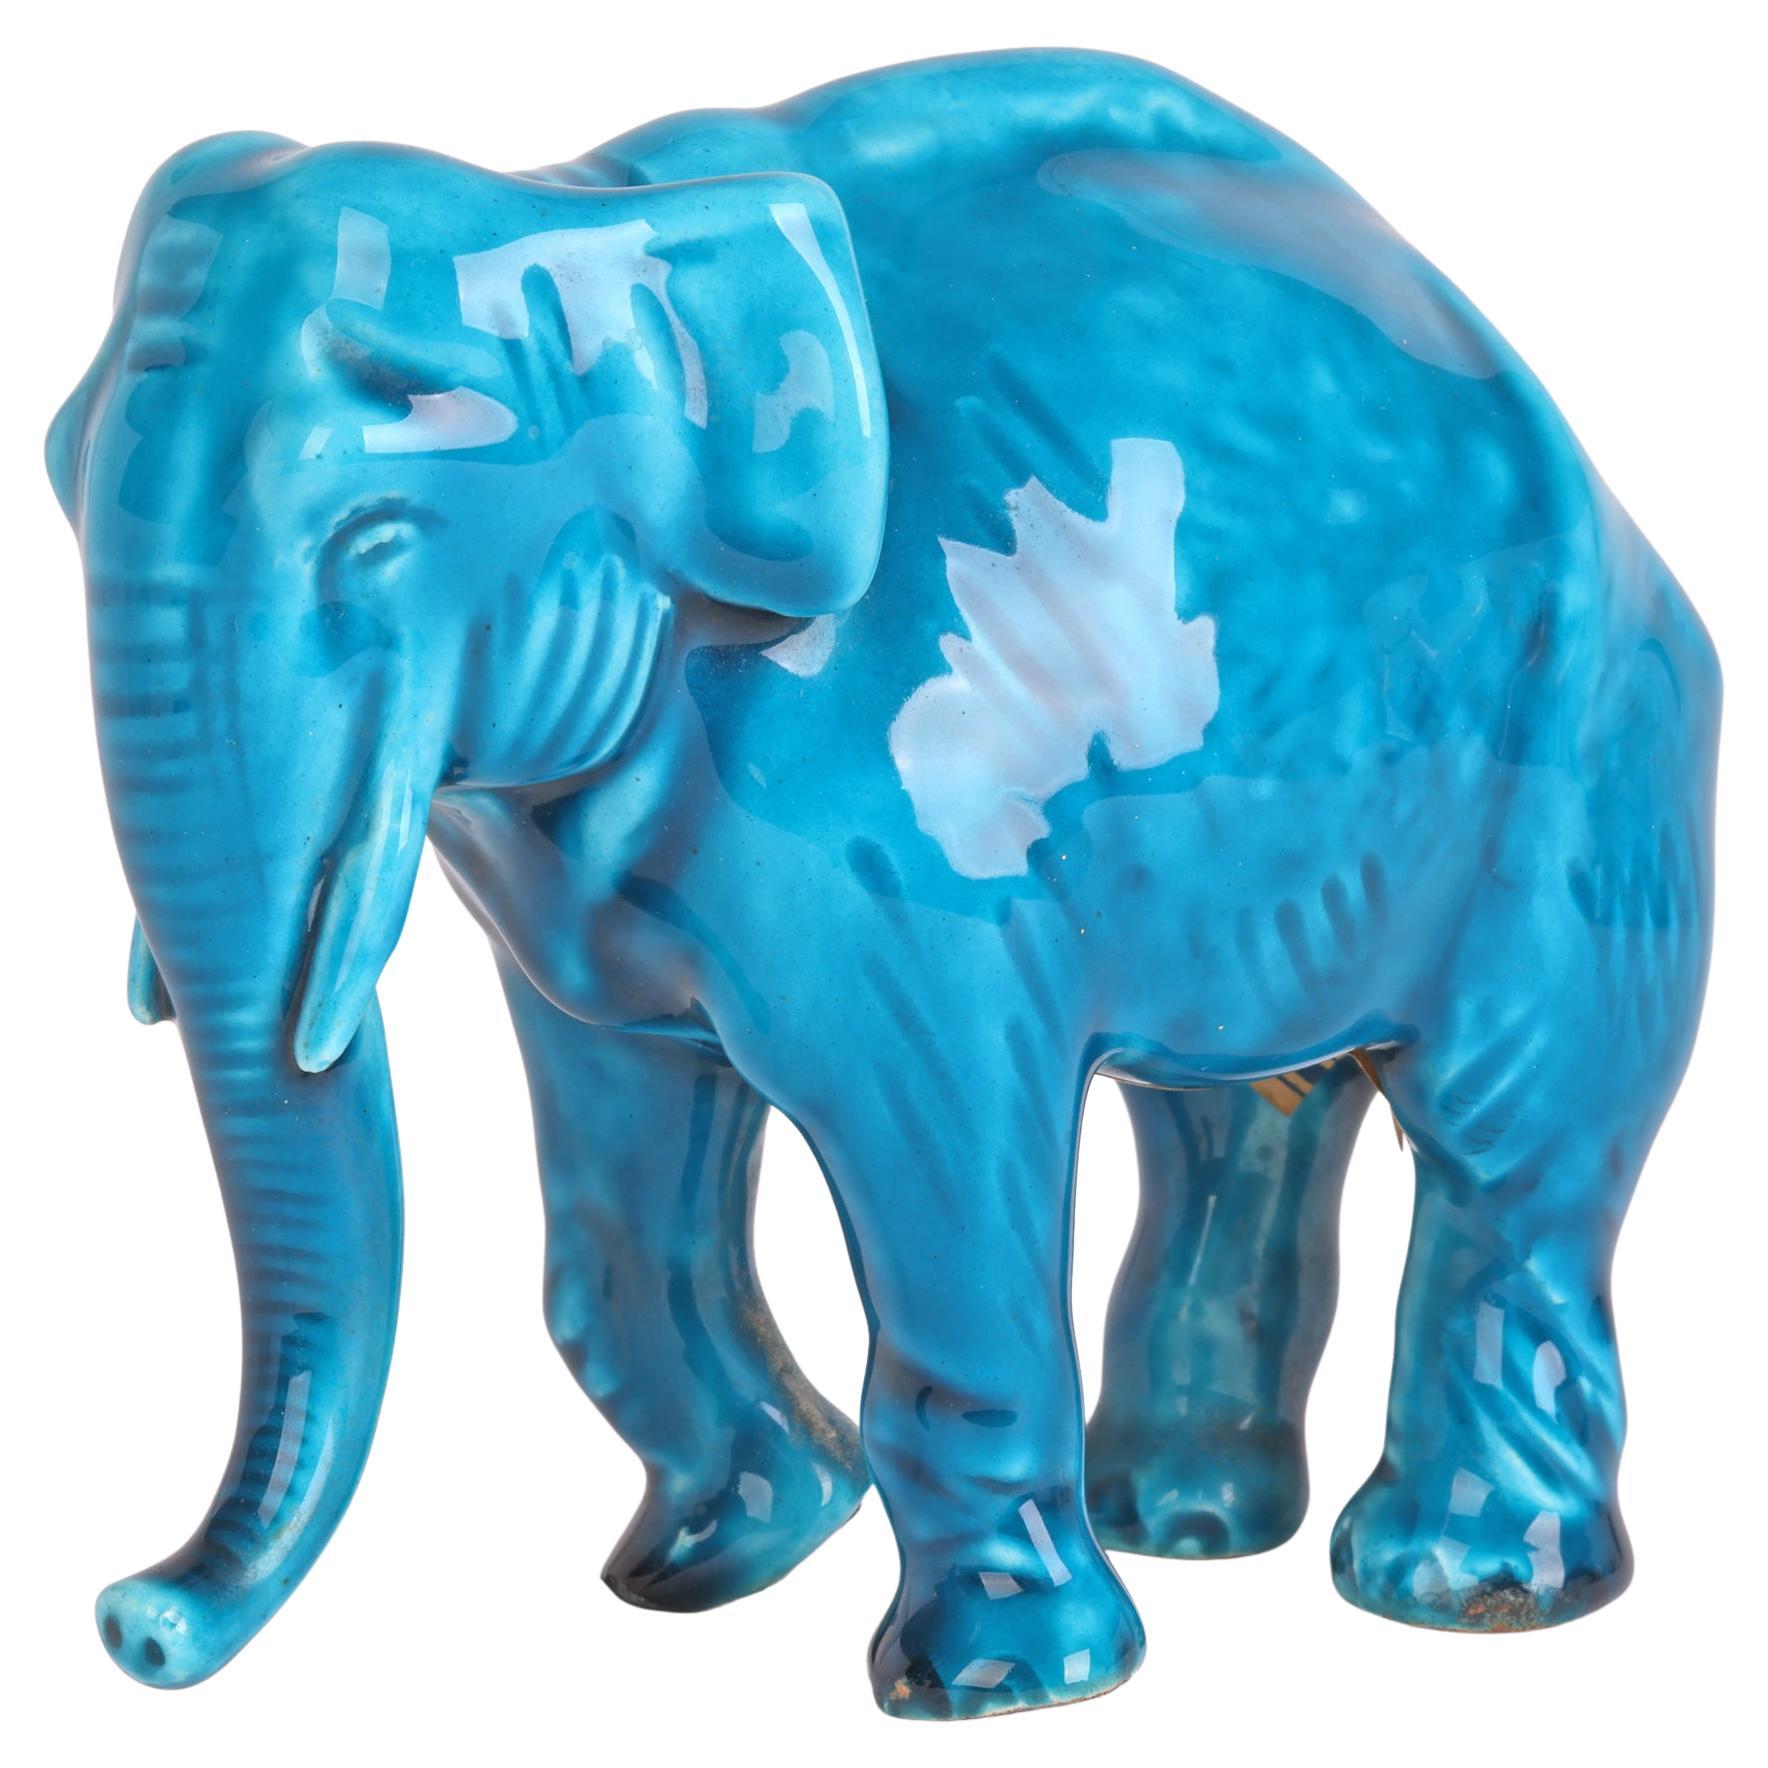 Türkis glasierte Elefantenfigur aus Keramik von Paul Milet Sevres   